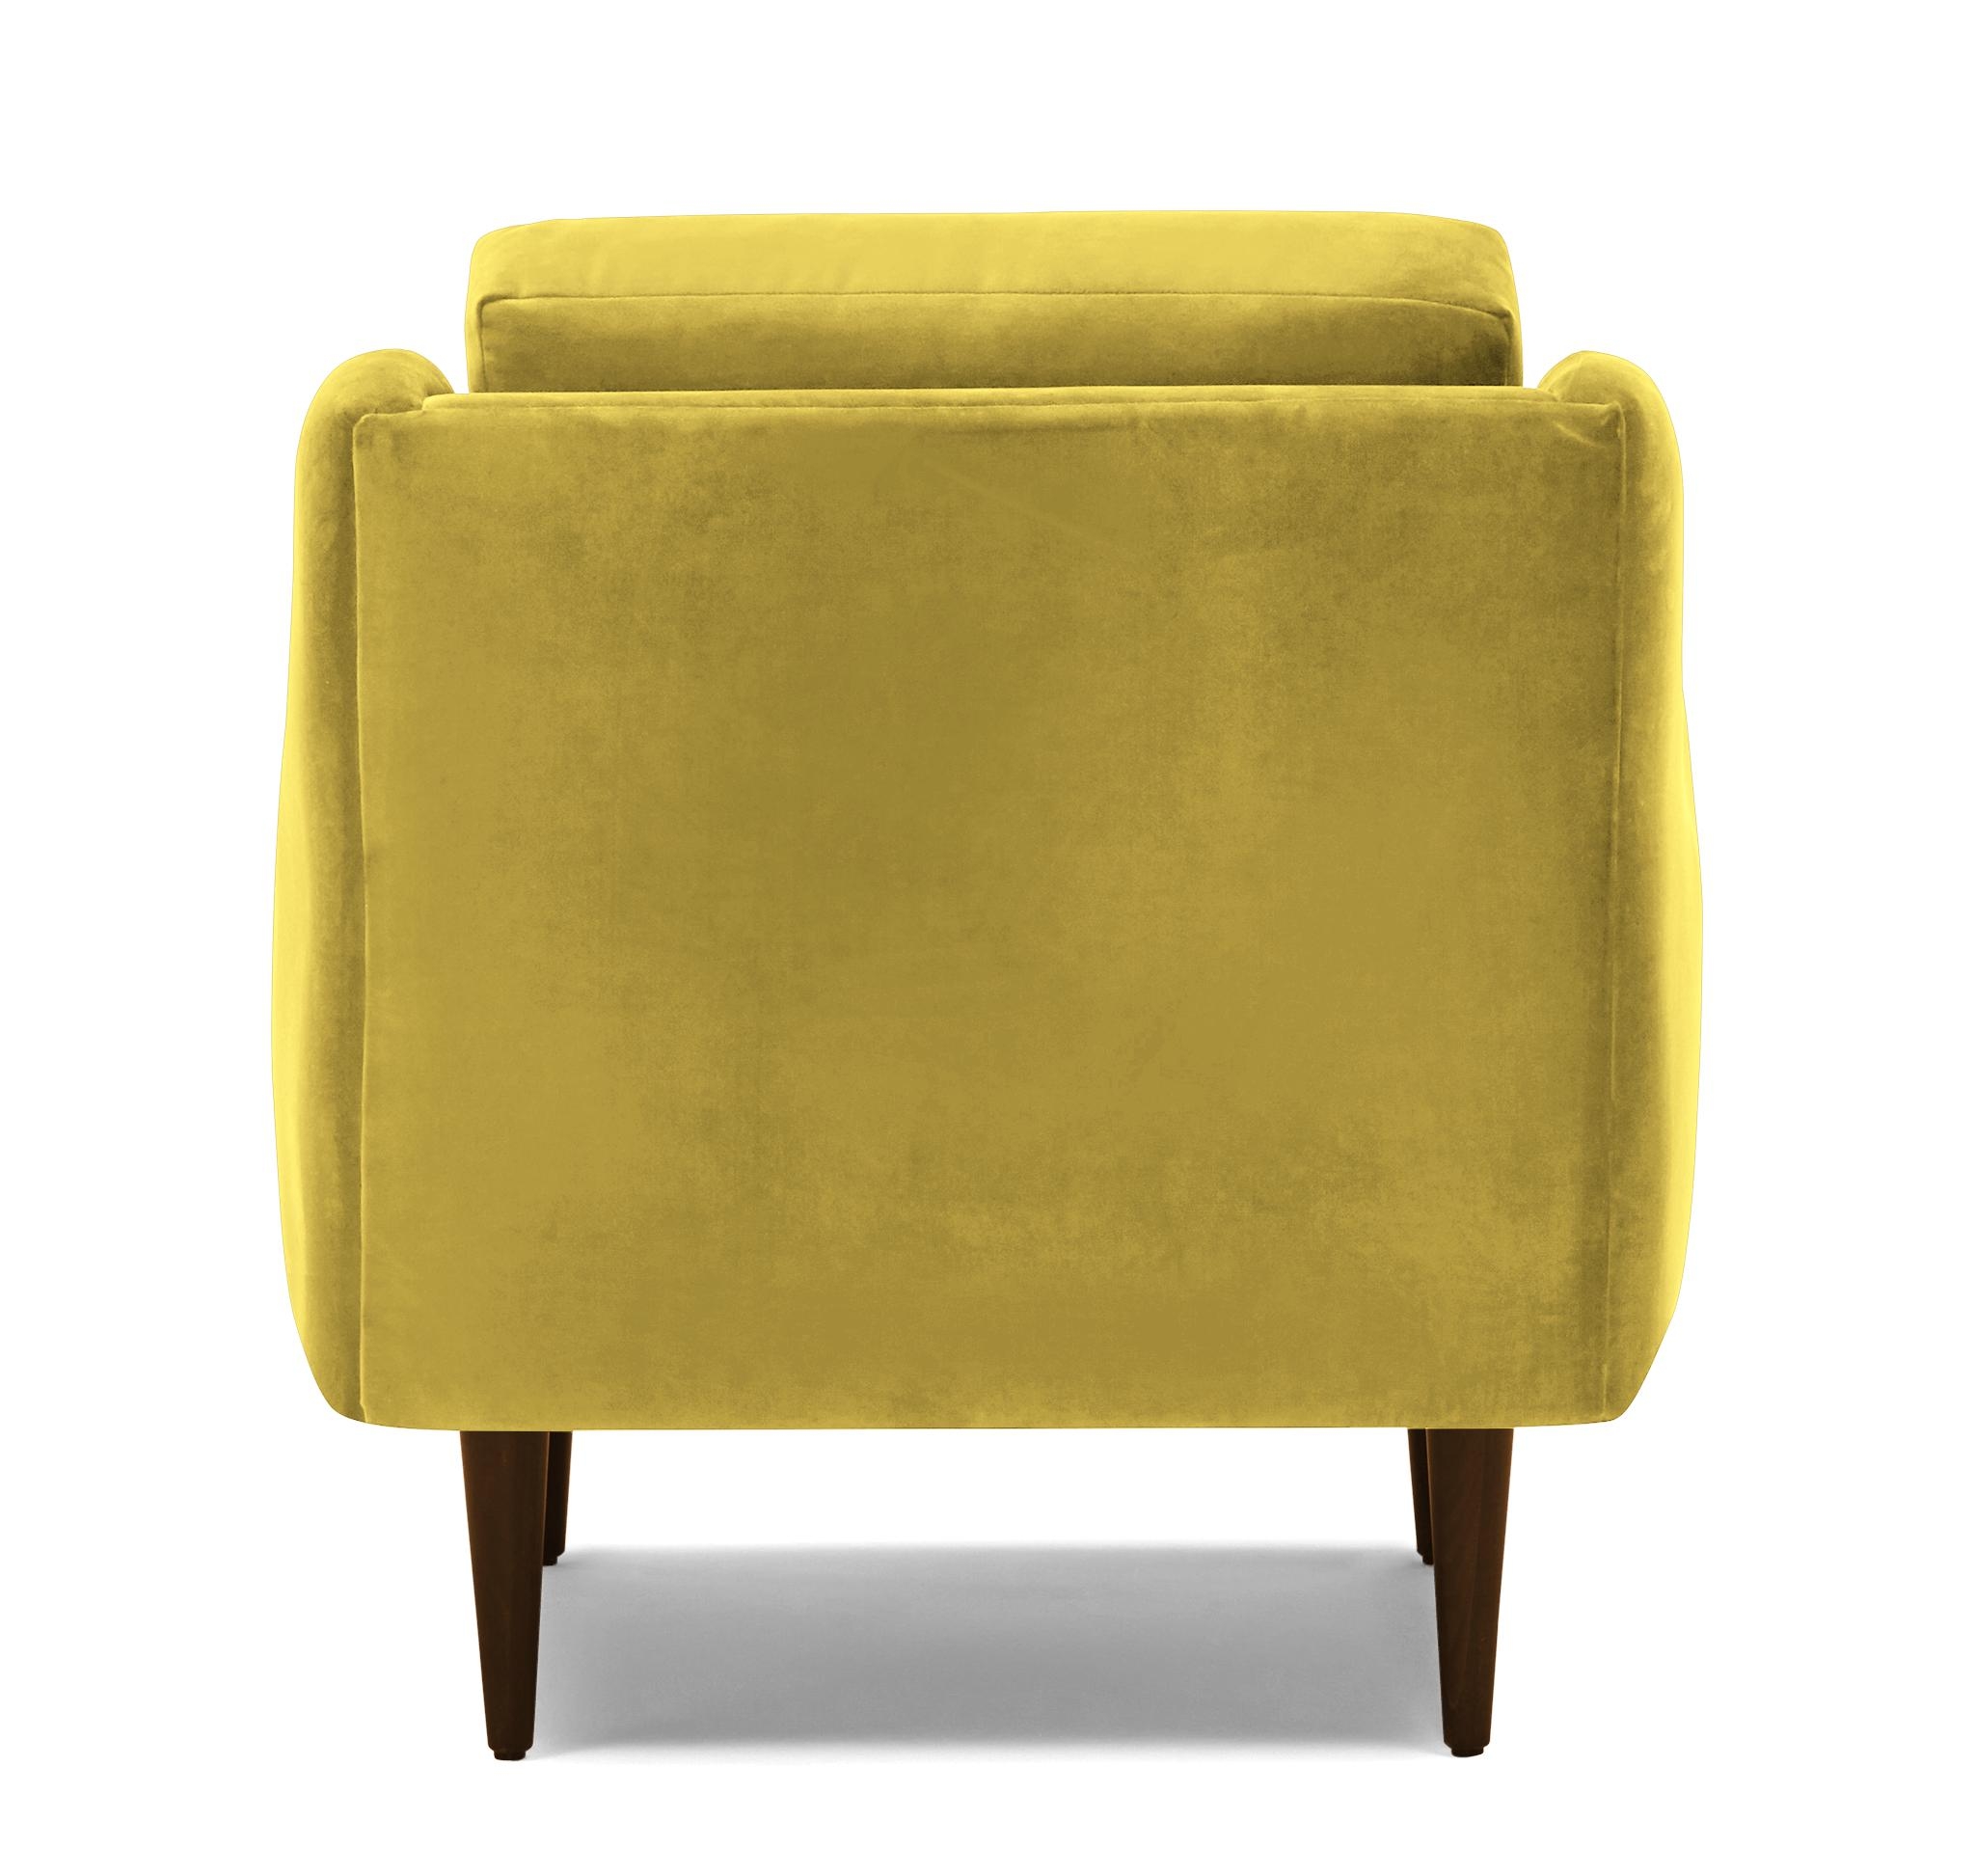 Yellow Bell Mid Century Modern Chair - Taylor Golden - Mocha - Image 4